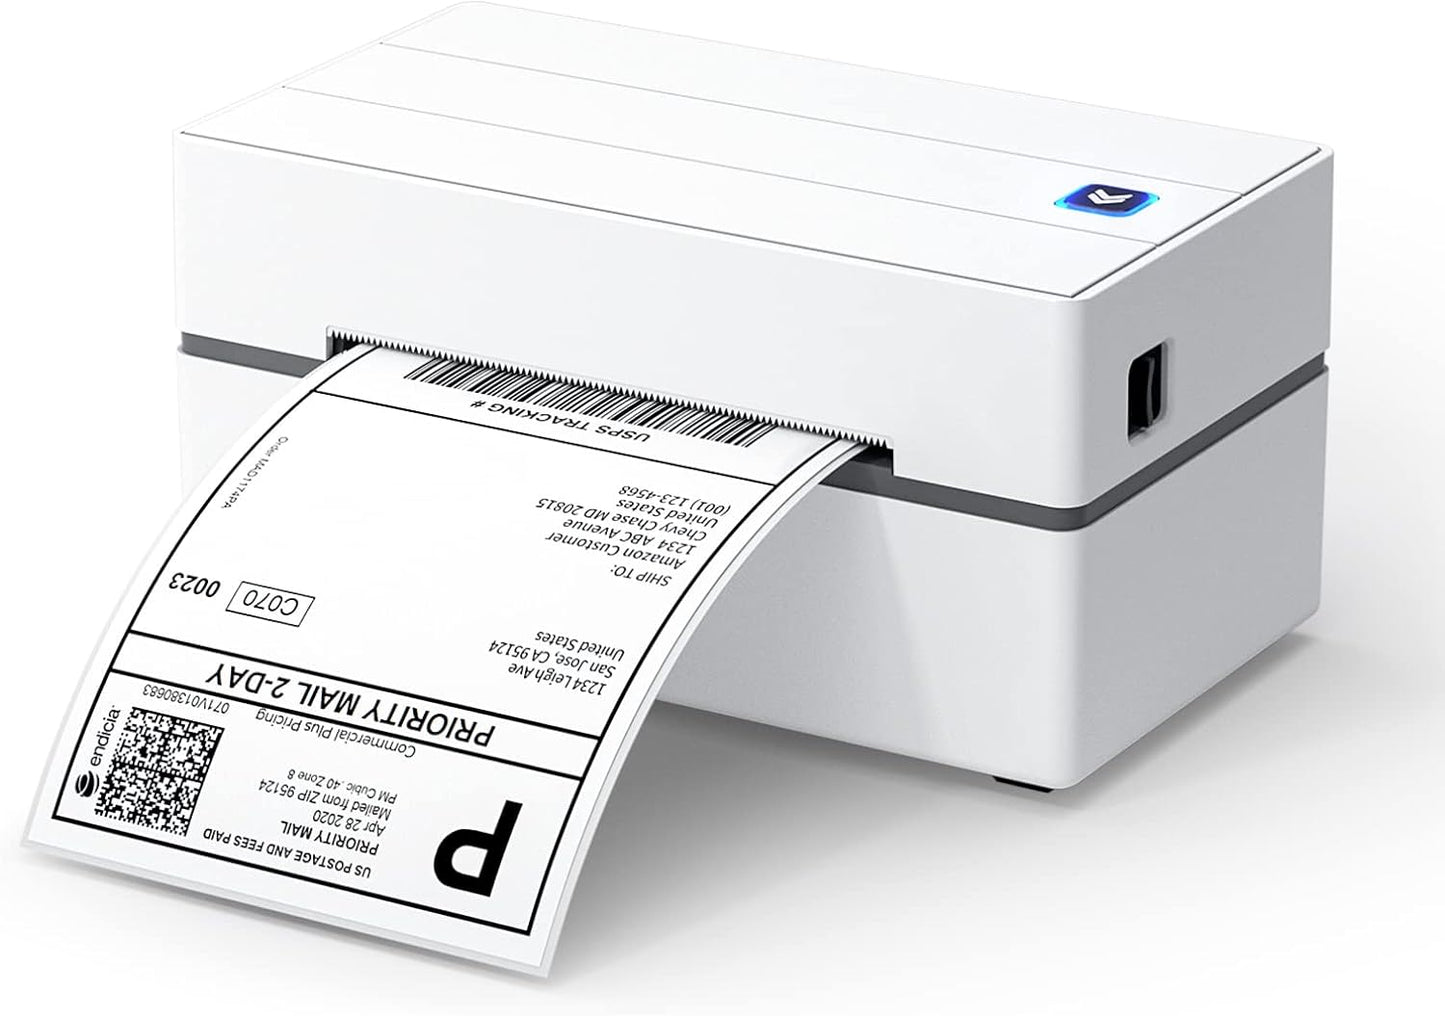 MUNBYN Shipping Label Printer, Thermal Shipping Label Printer for Shipping Packages - Off White